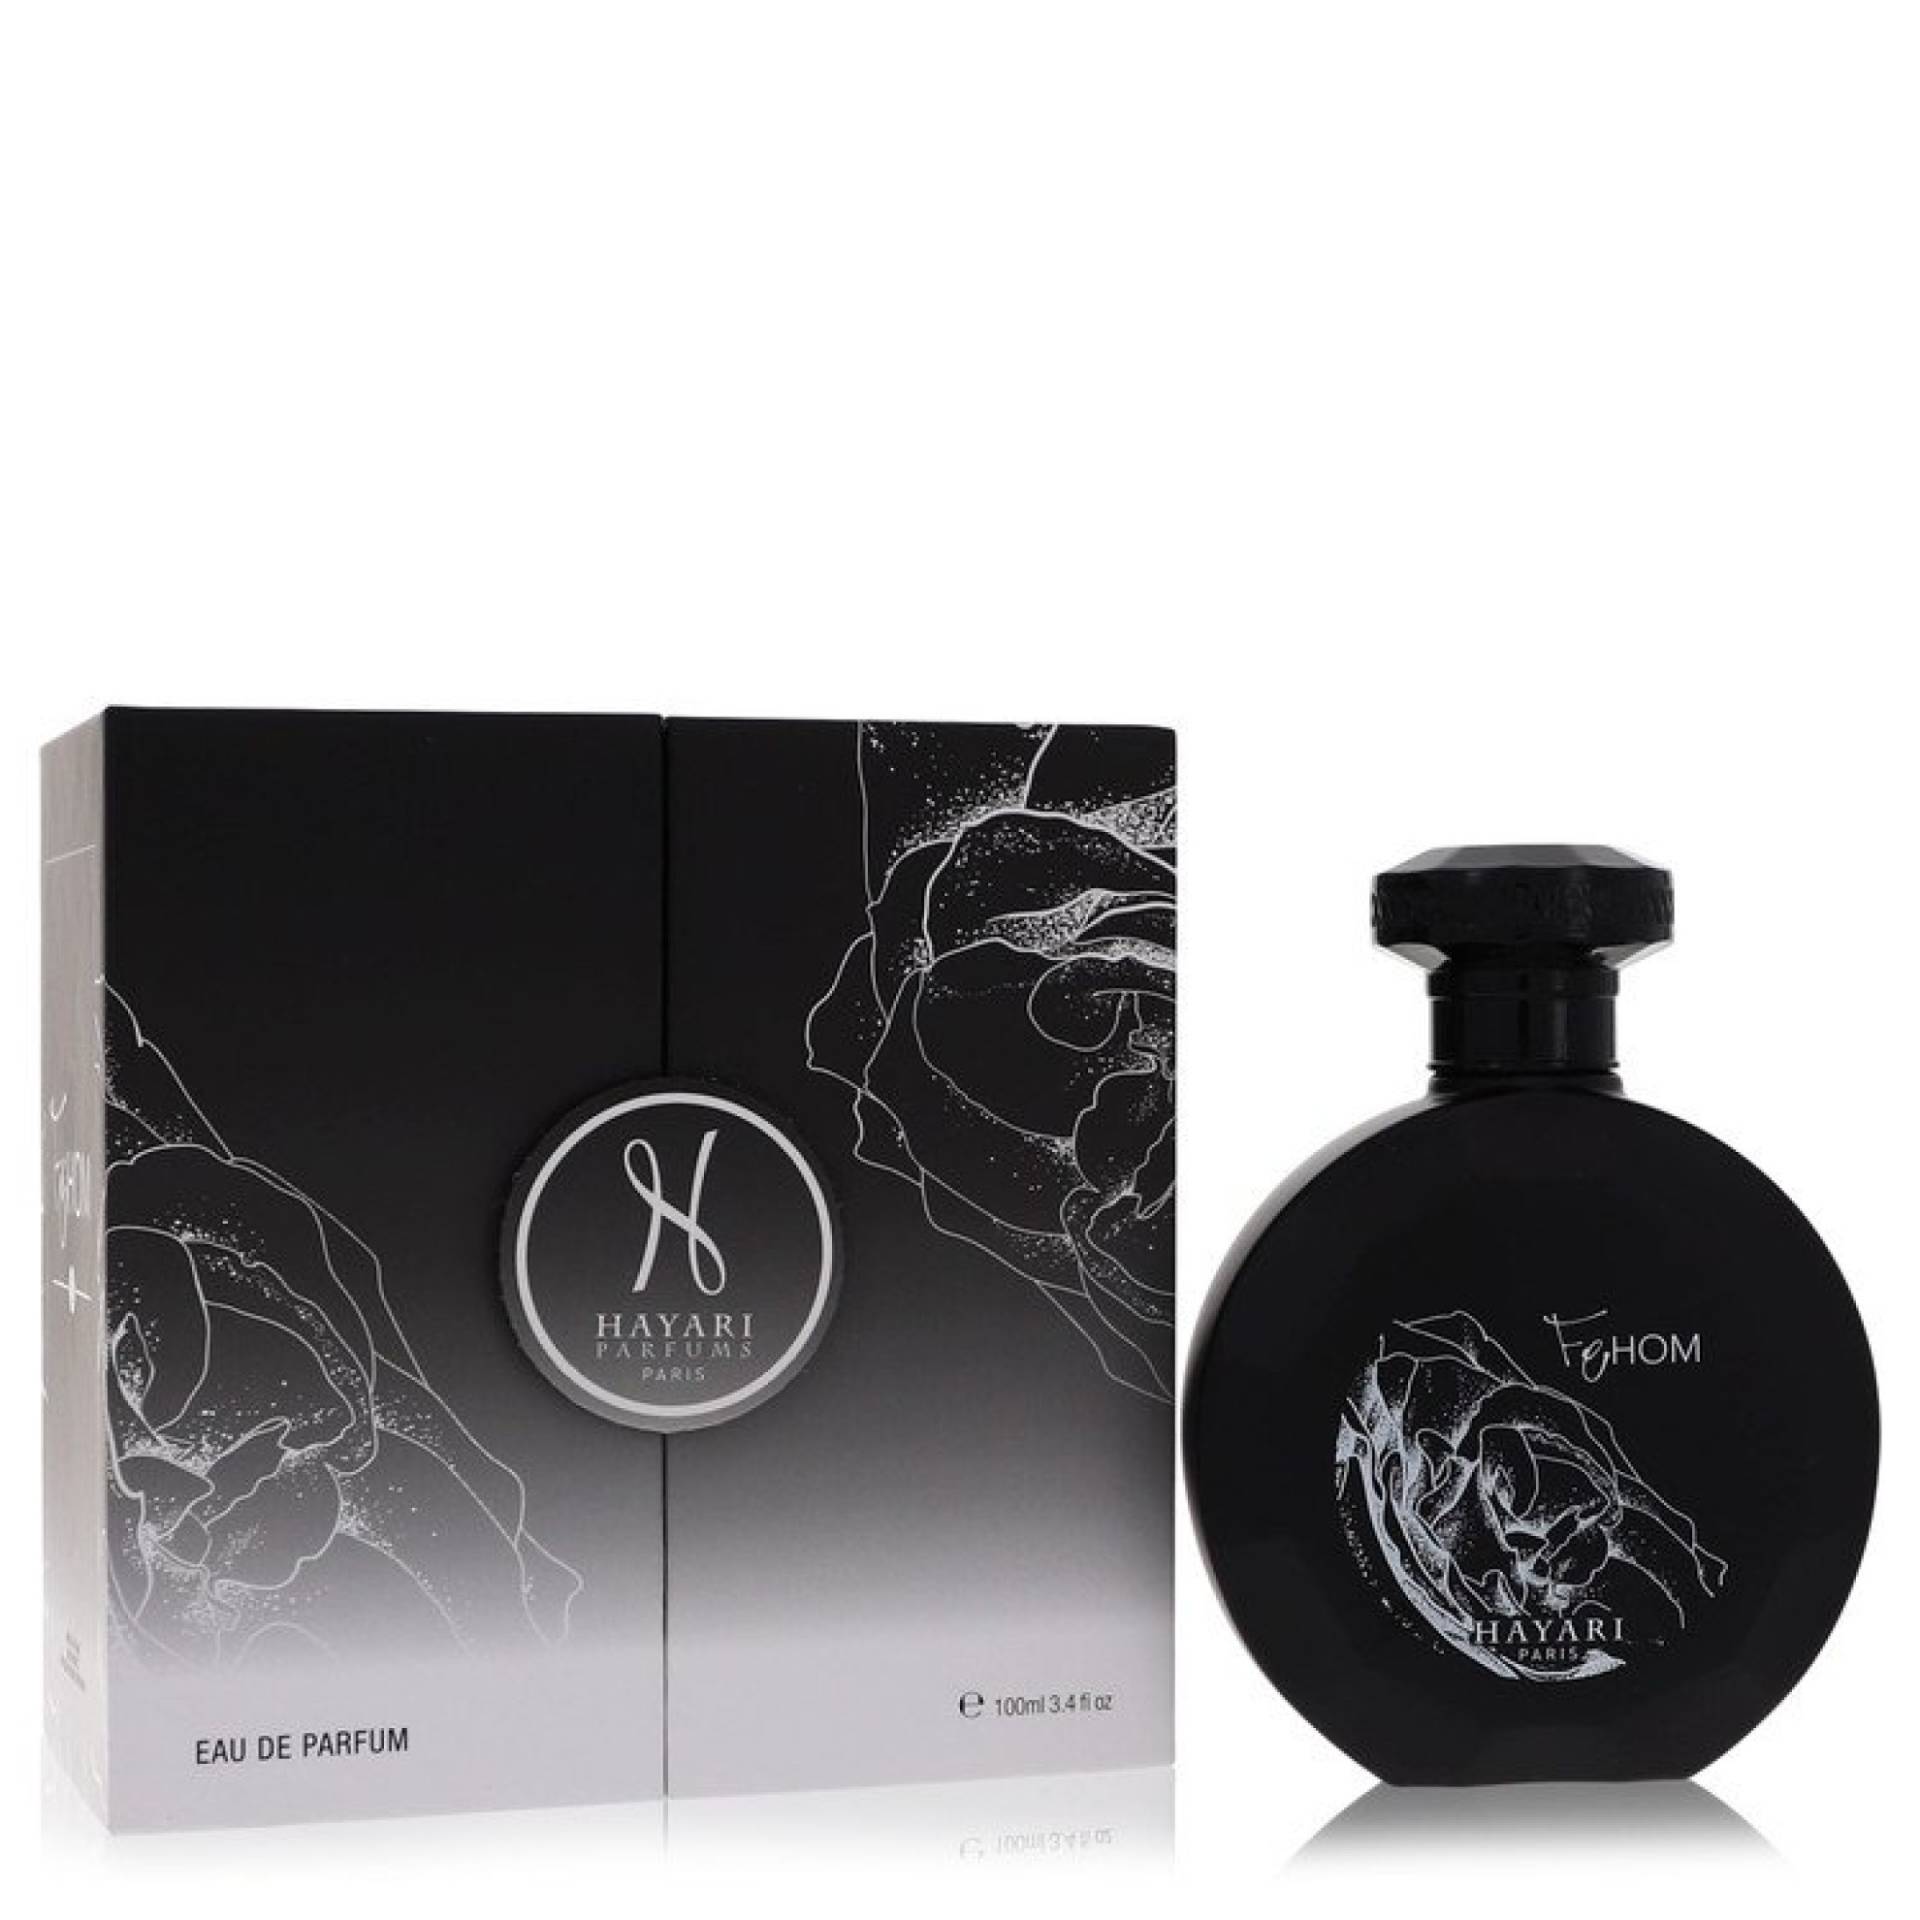 Hayari Fehom Eau De Parfum Spray (Unisex) 100 ml von Hayari